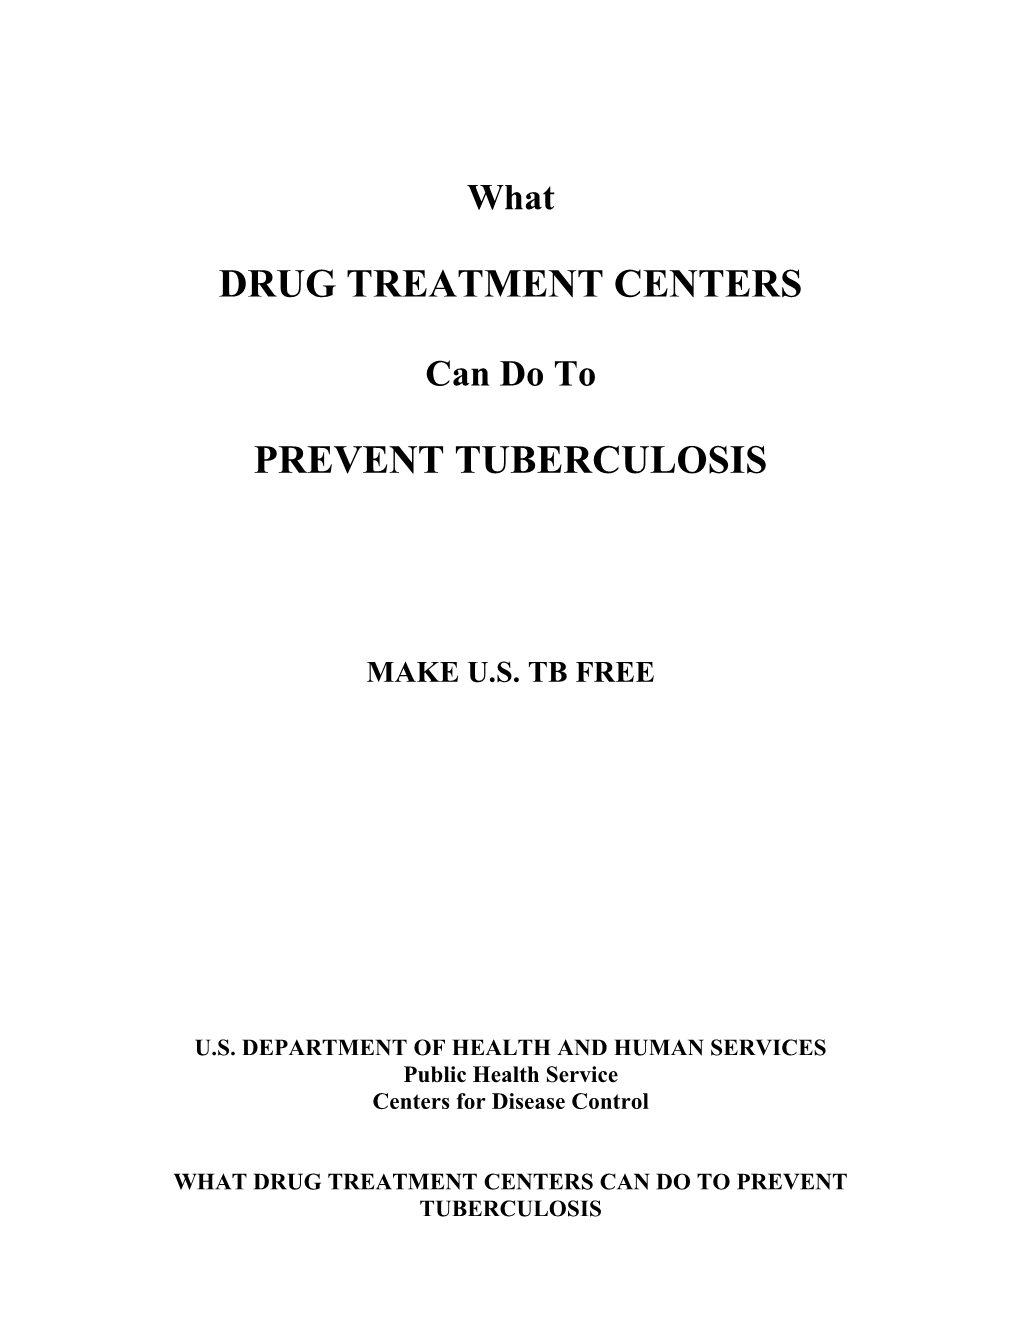 Drug Treatment Centers